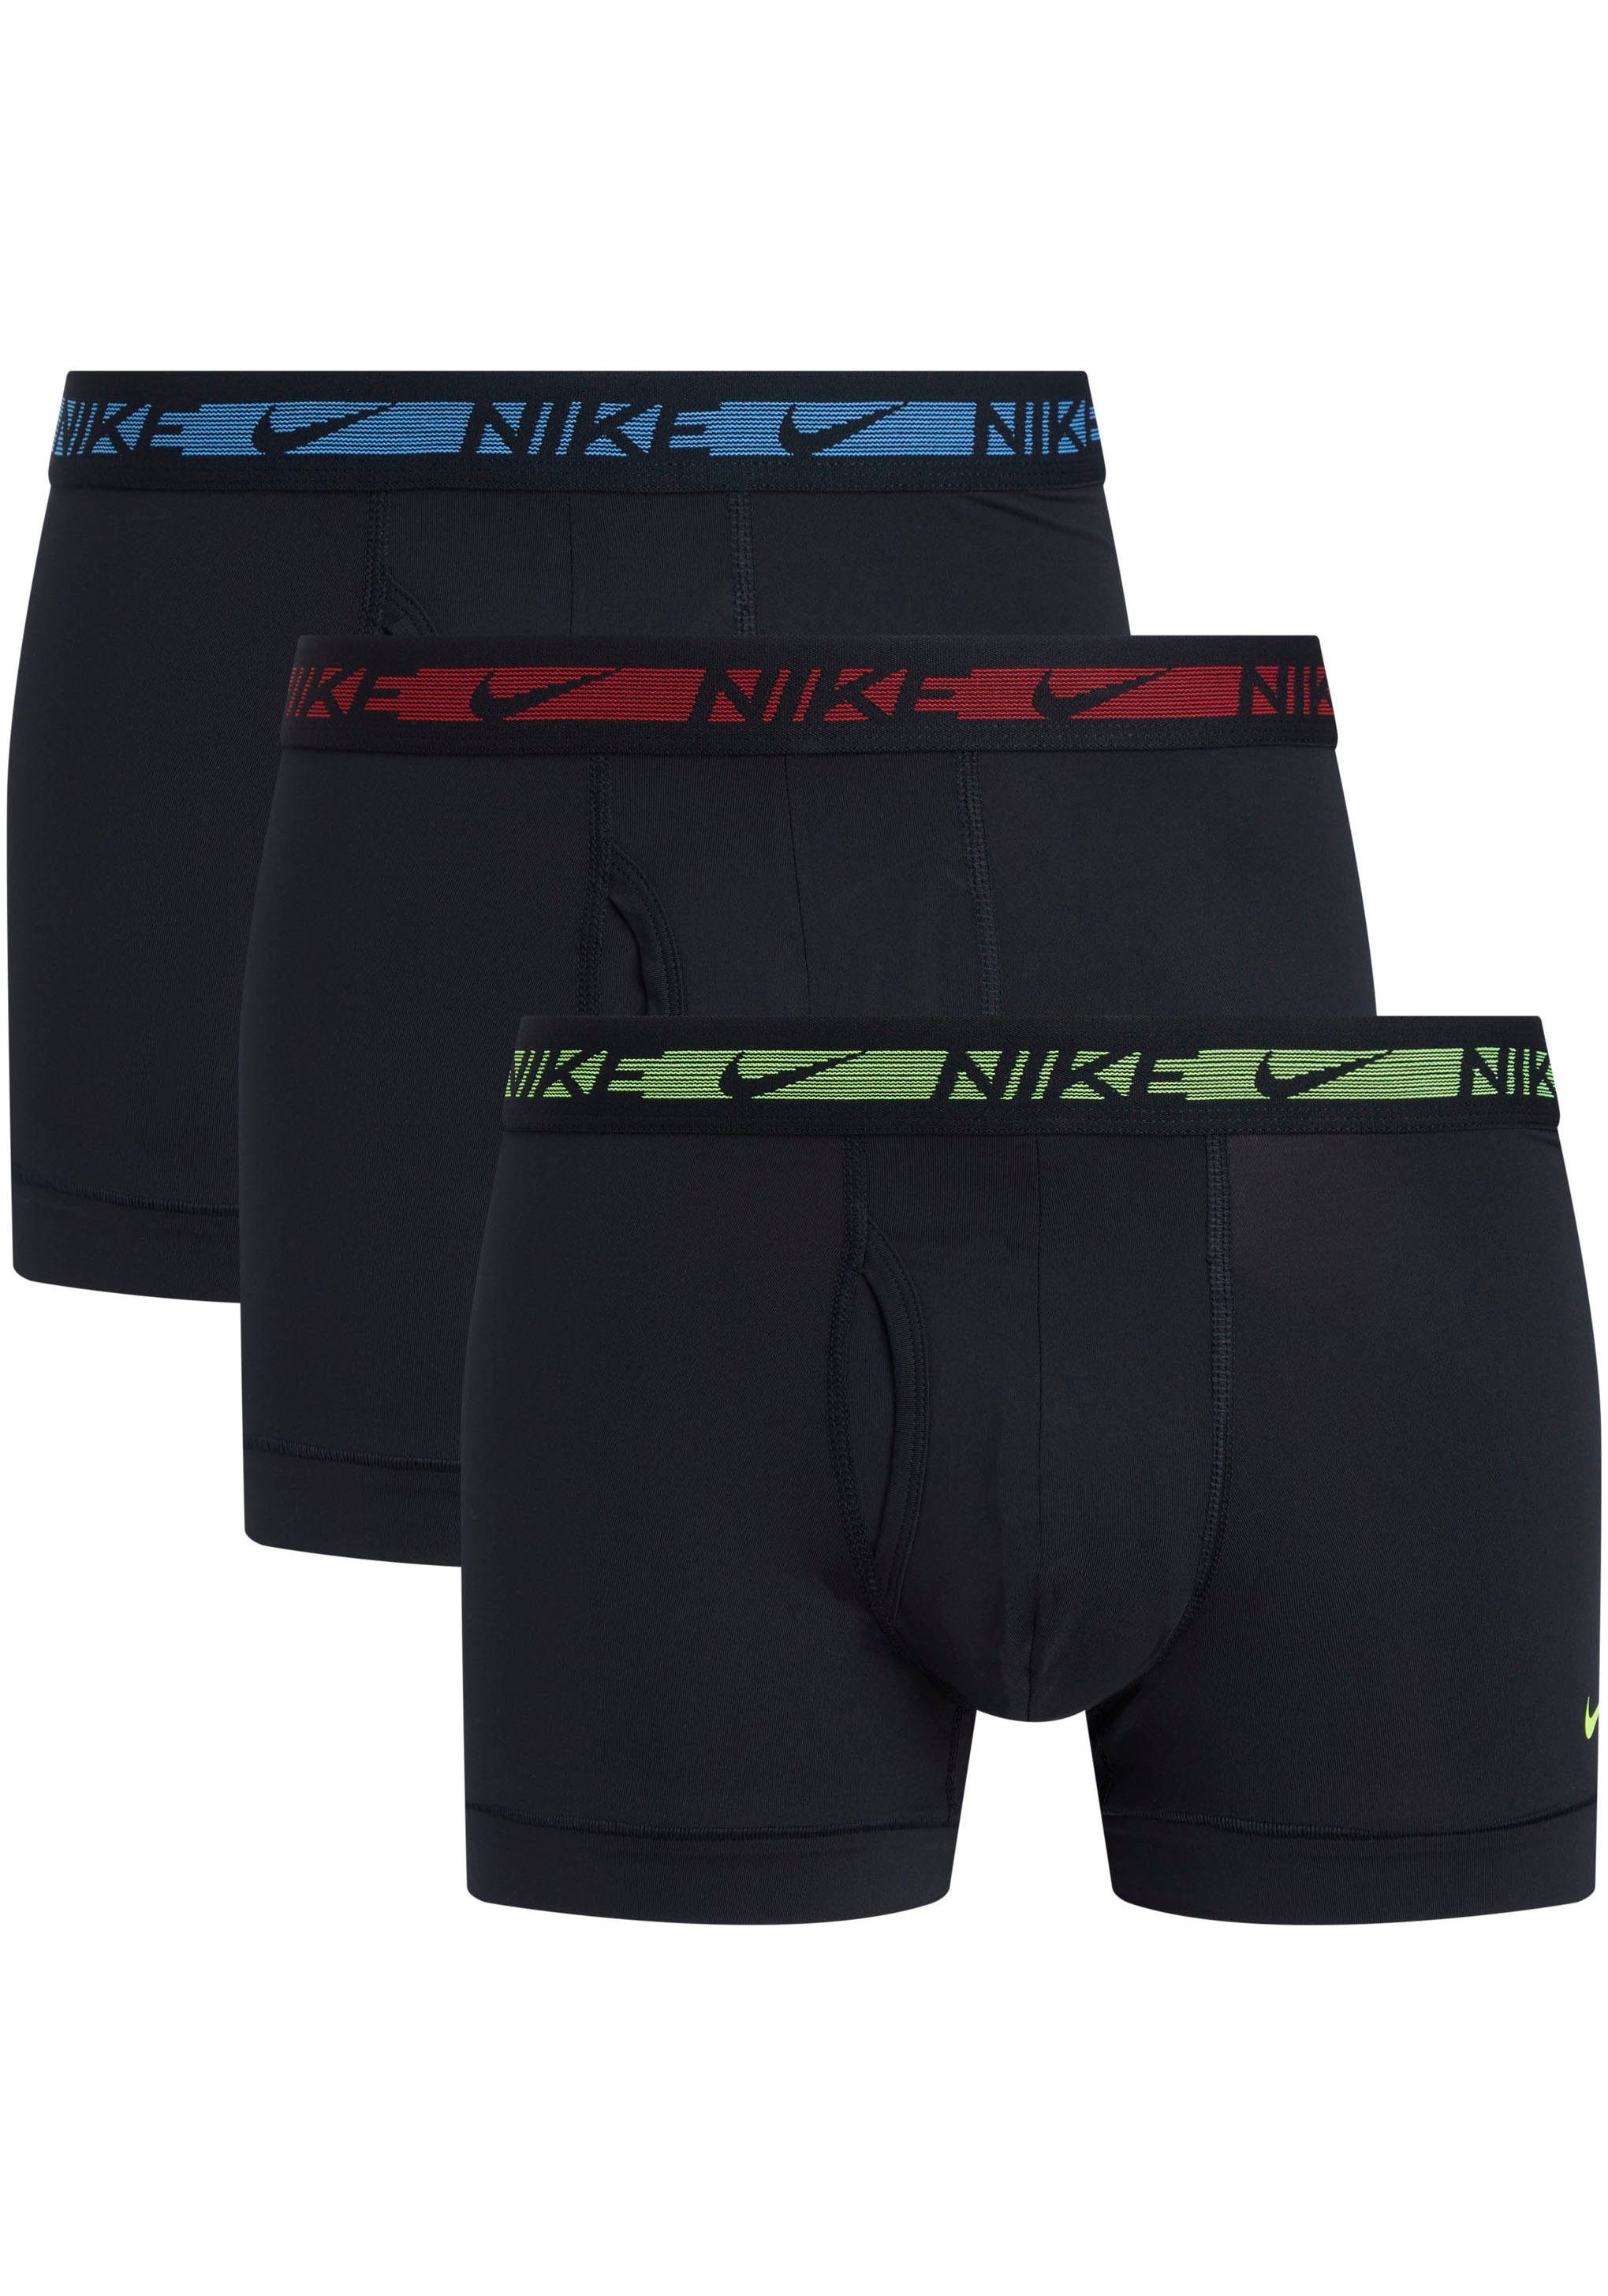 TRUNK NIKE Stück) NIKE Underwear BLACK/VOLT_WB/UNI_BLU_WB/UNI_RED_WB (3 (Packung, mit Logo-Elastikbund 3PK 3er-Pack) Trunk